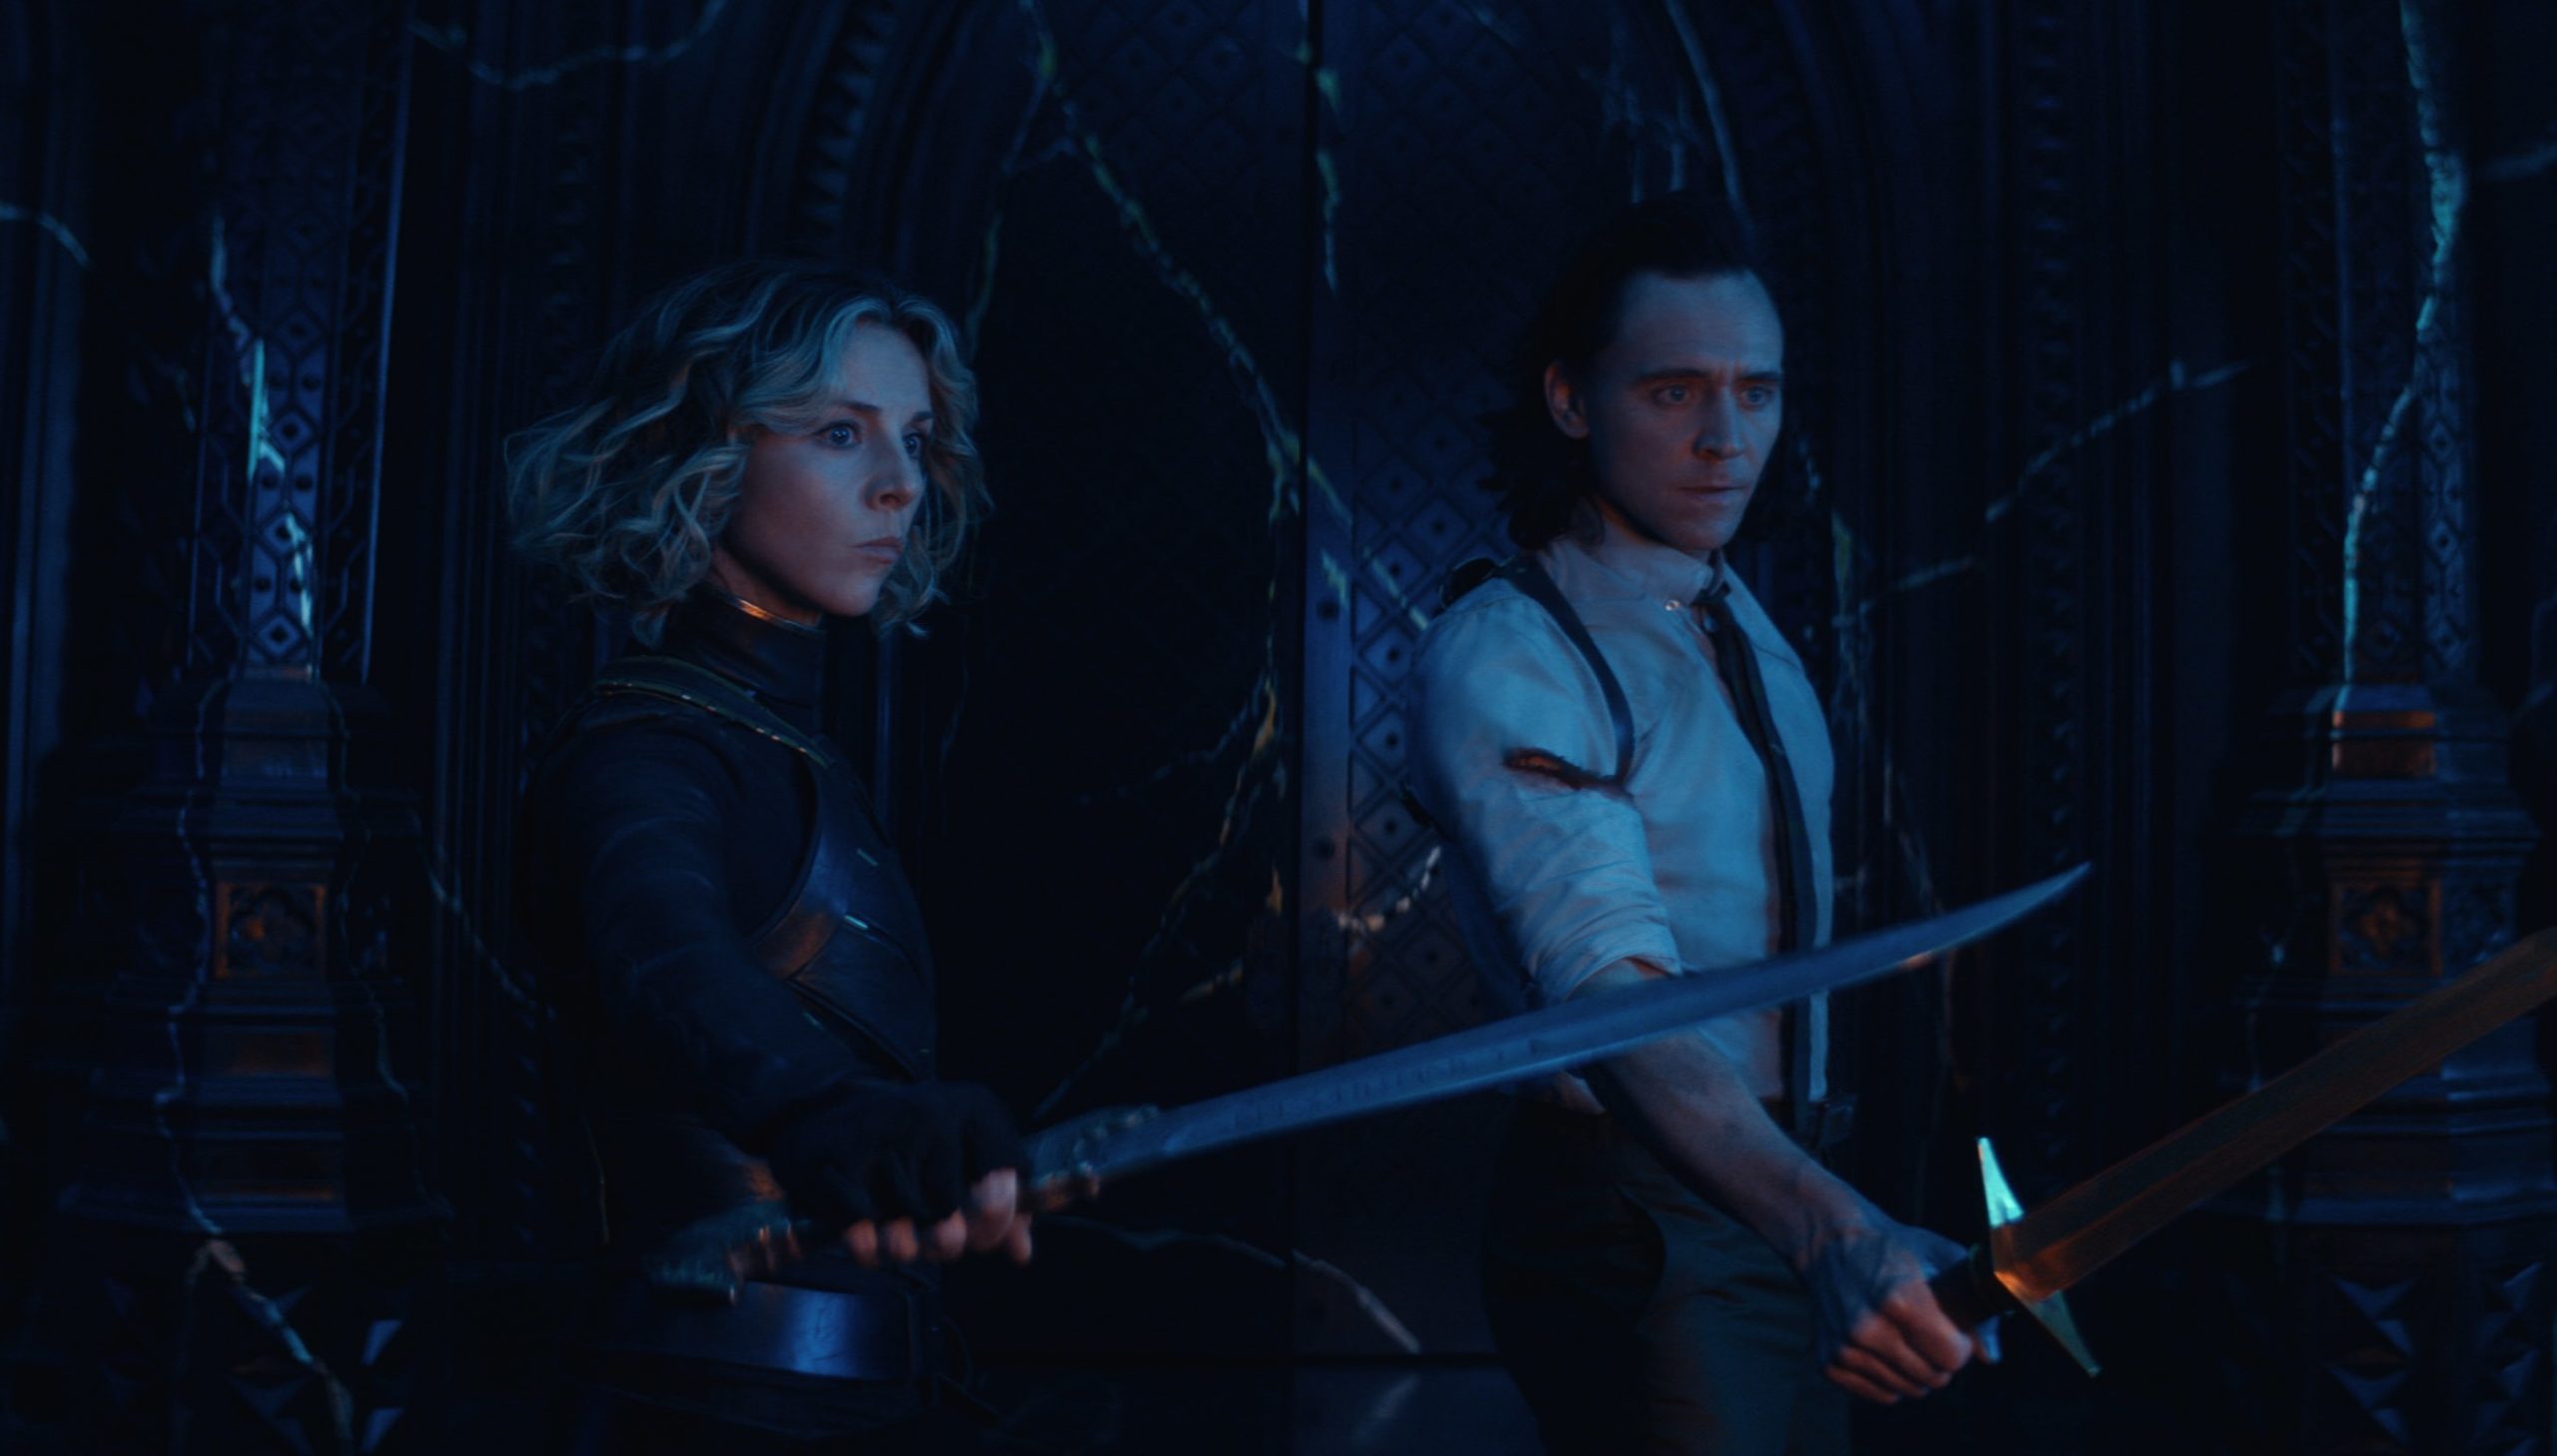 Marvel reveals Loki is its most popular Disney Plus show as production on season 2 begins